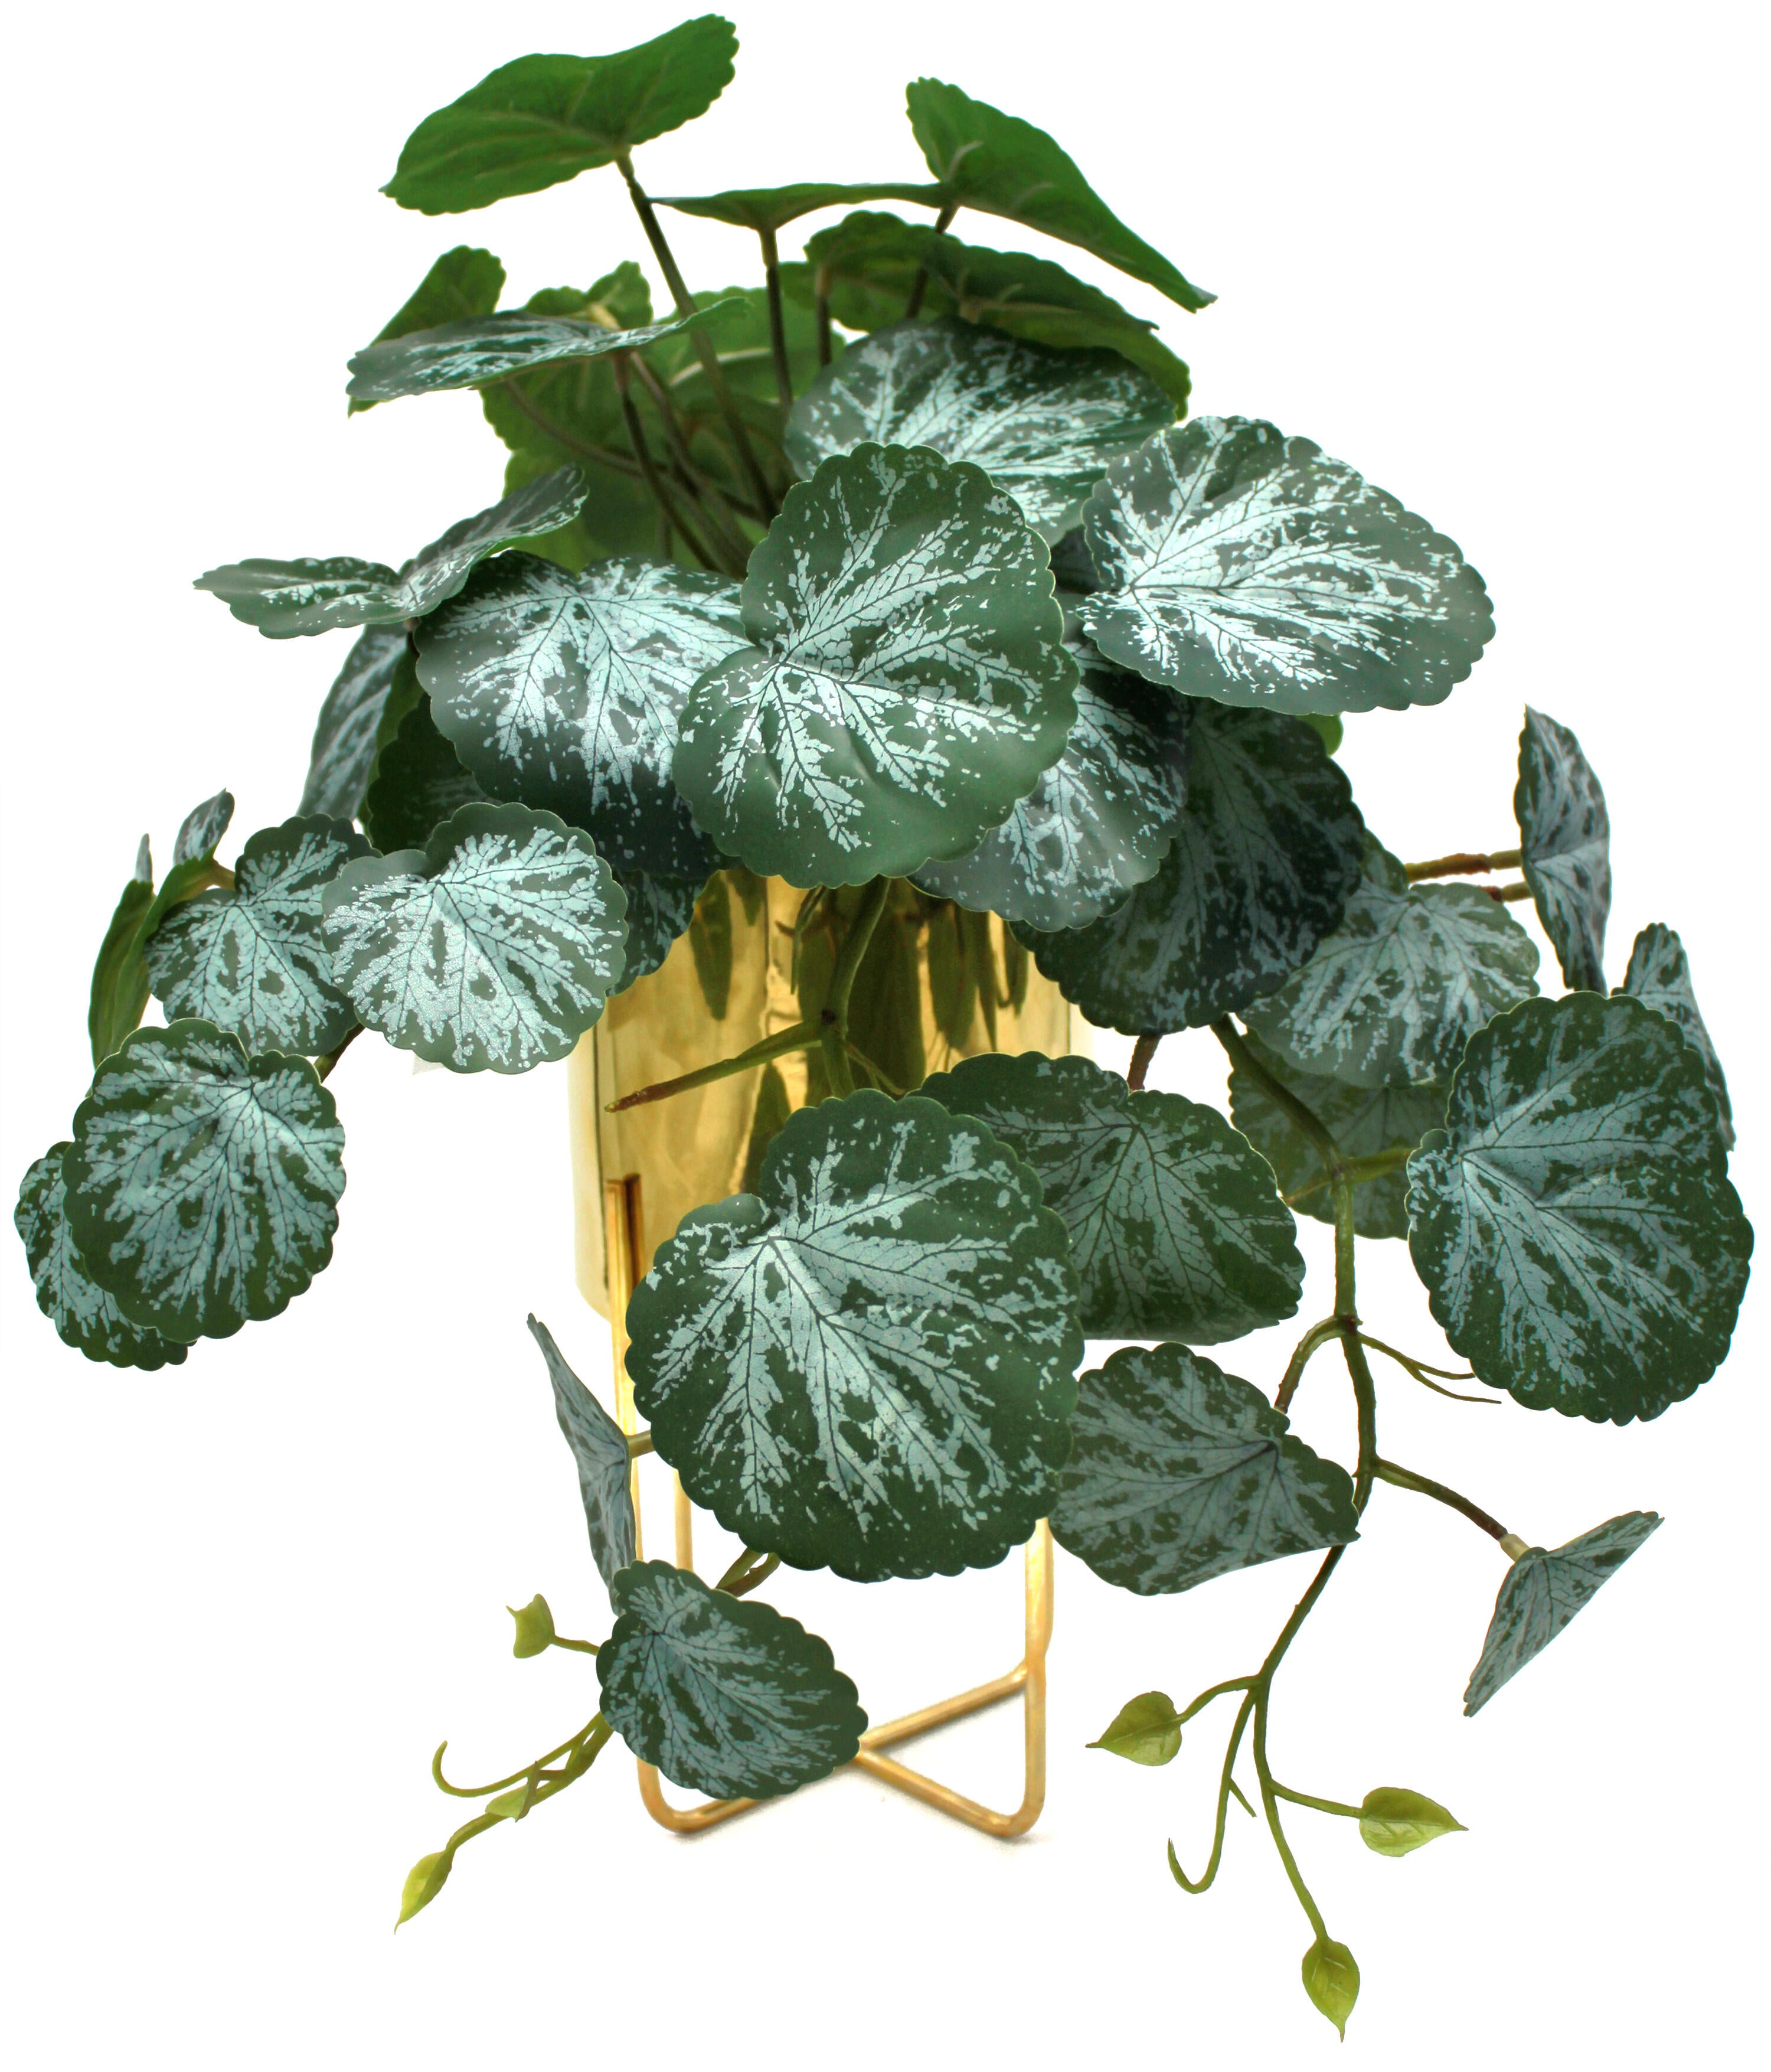 Planta artificial peperonia de 42 cm de altura en maceta de 13 cm